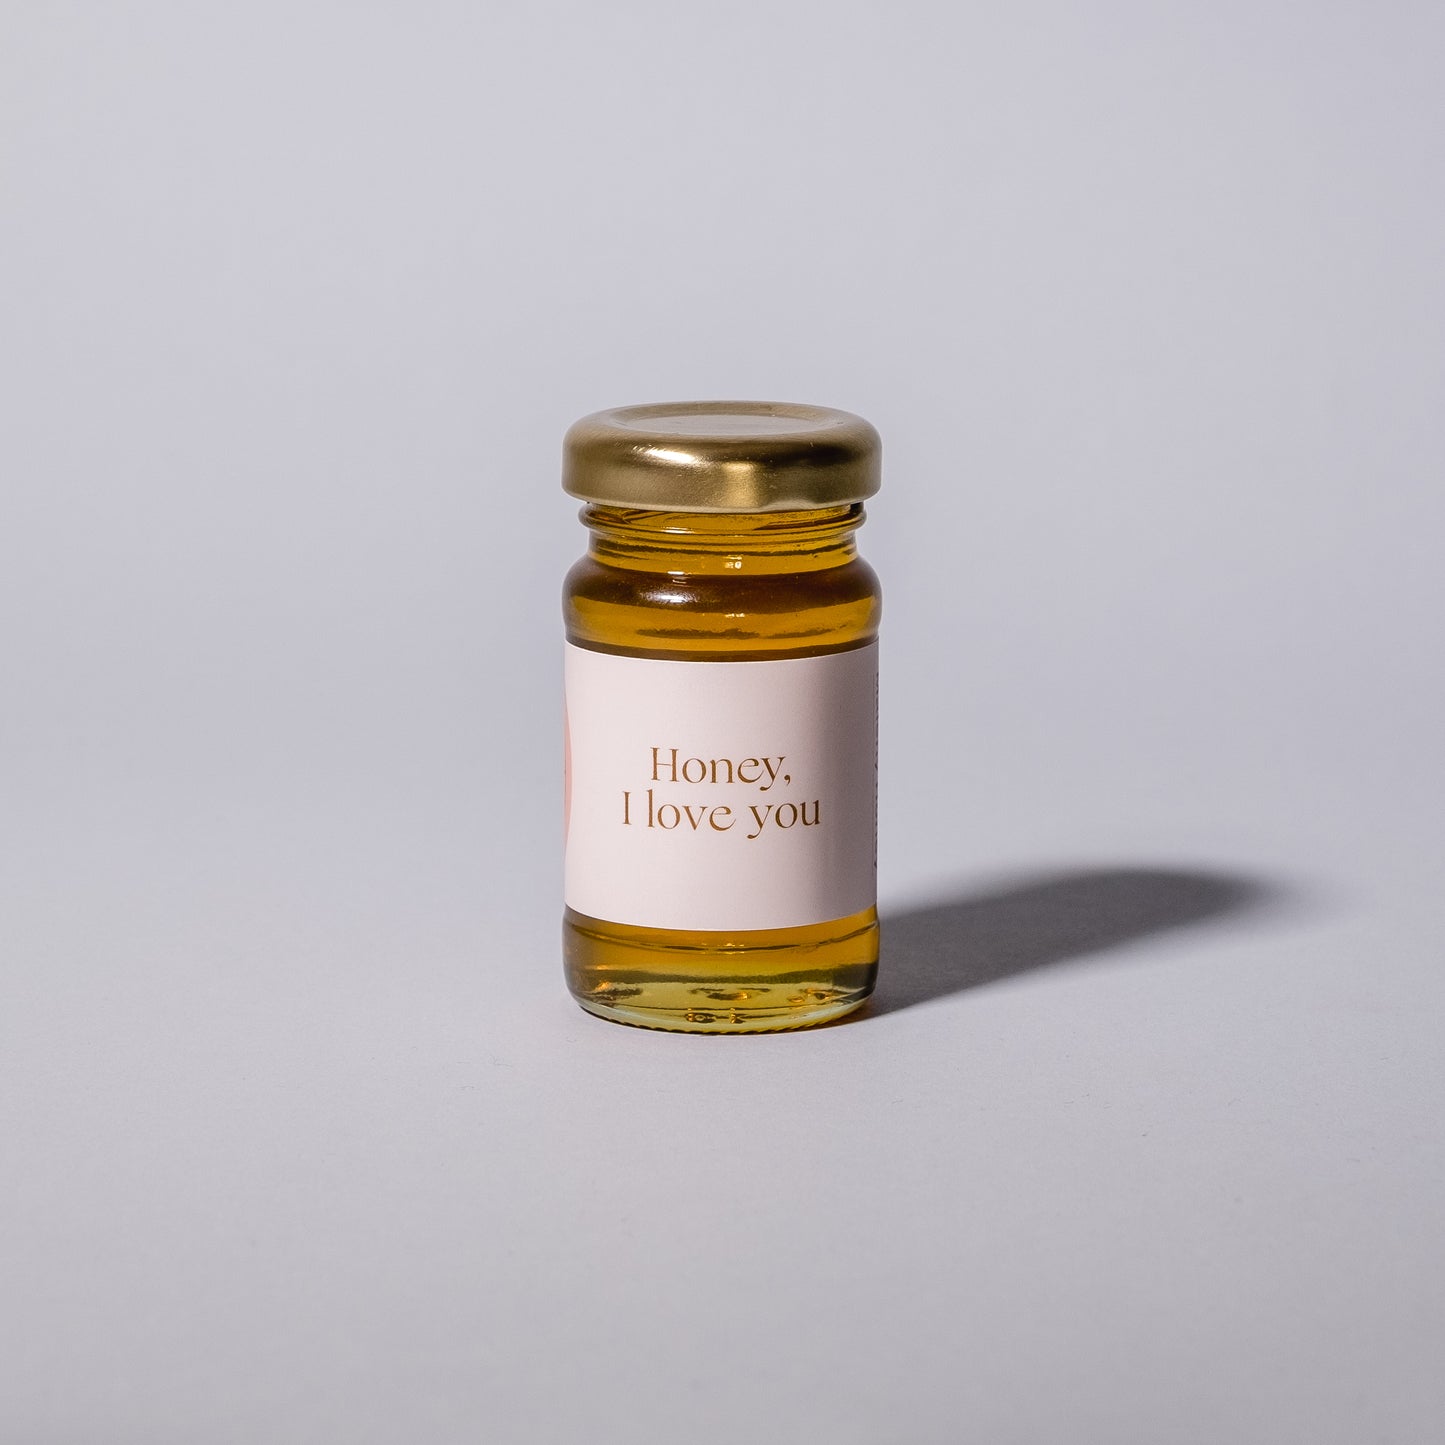 Maleny Honey Petite - All Varieties